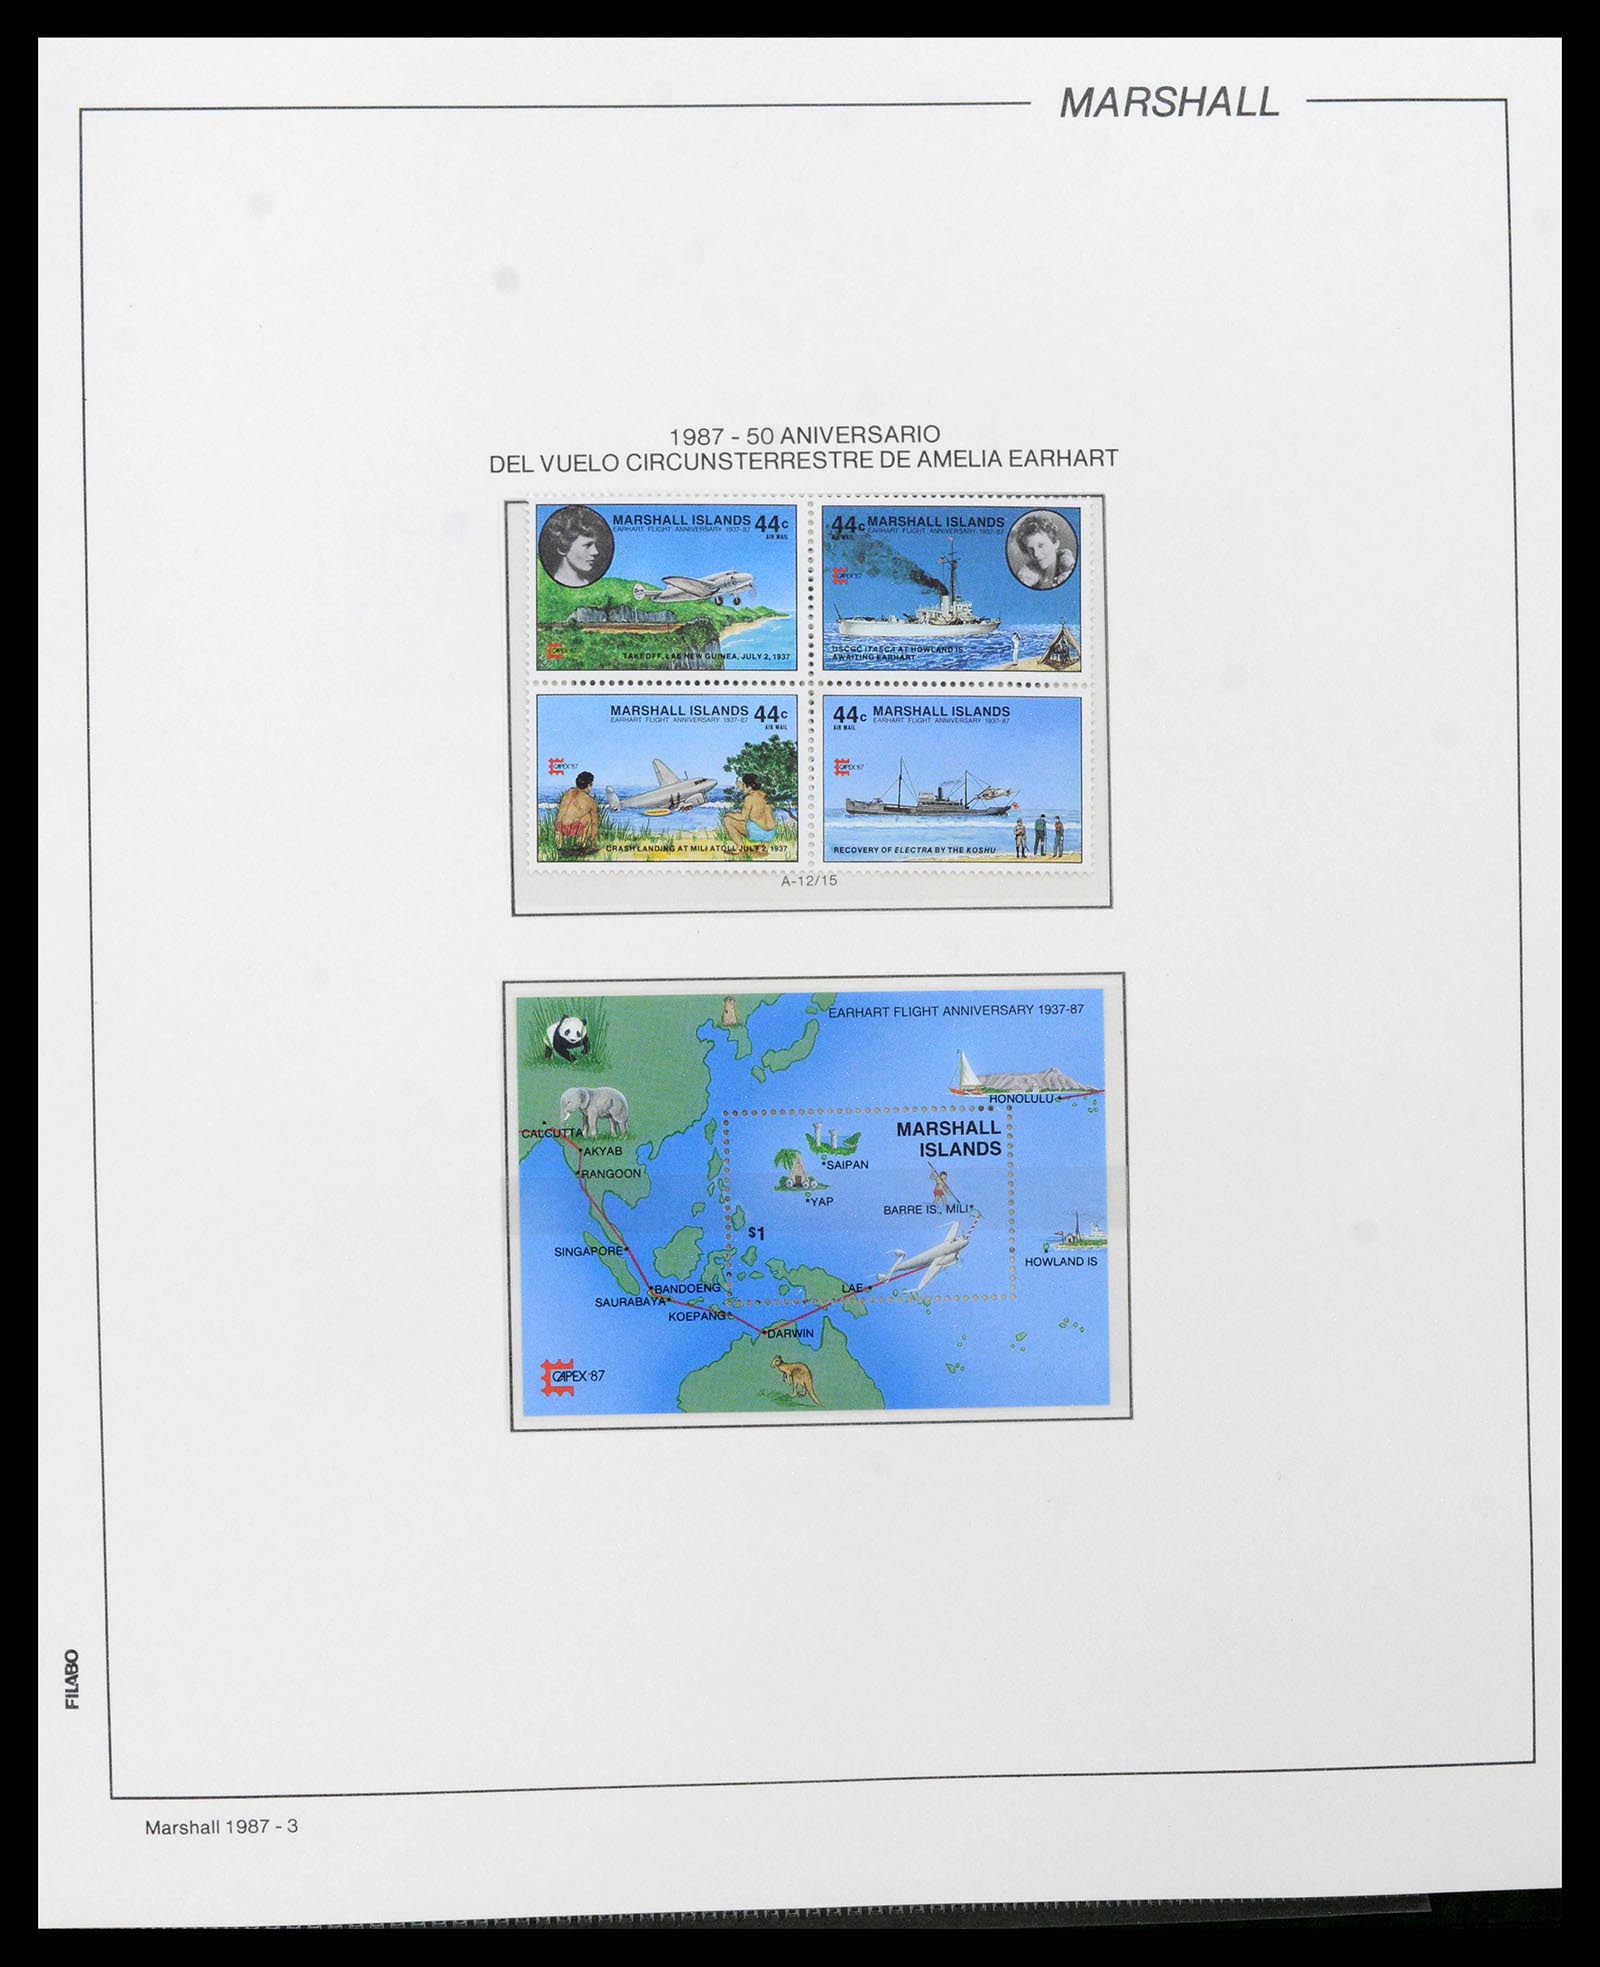 39222 0124 - Stamp collection 39222 Palau, Micronesia and Marshall islands 1980-1995.